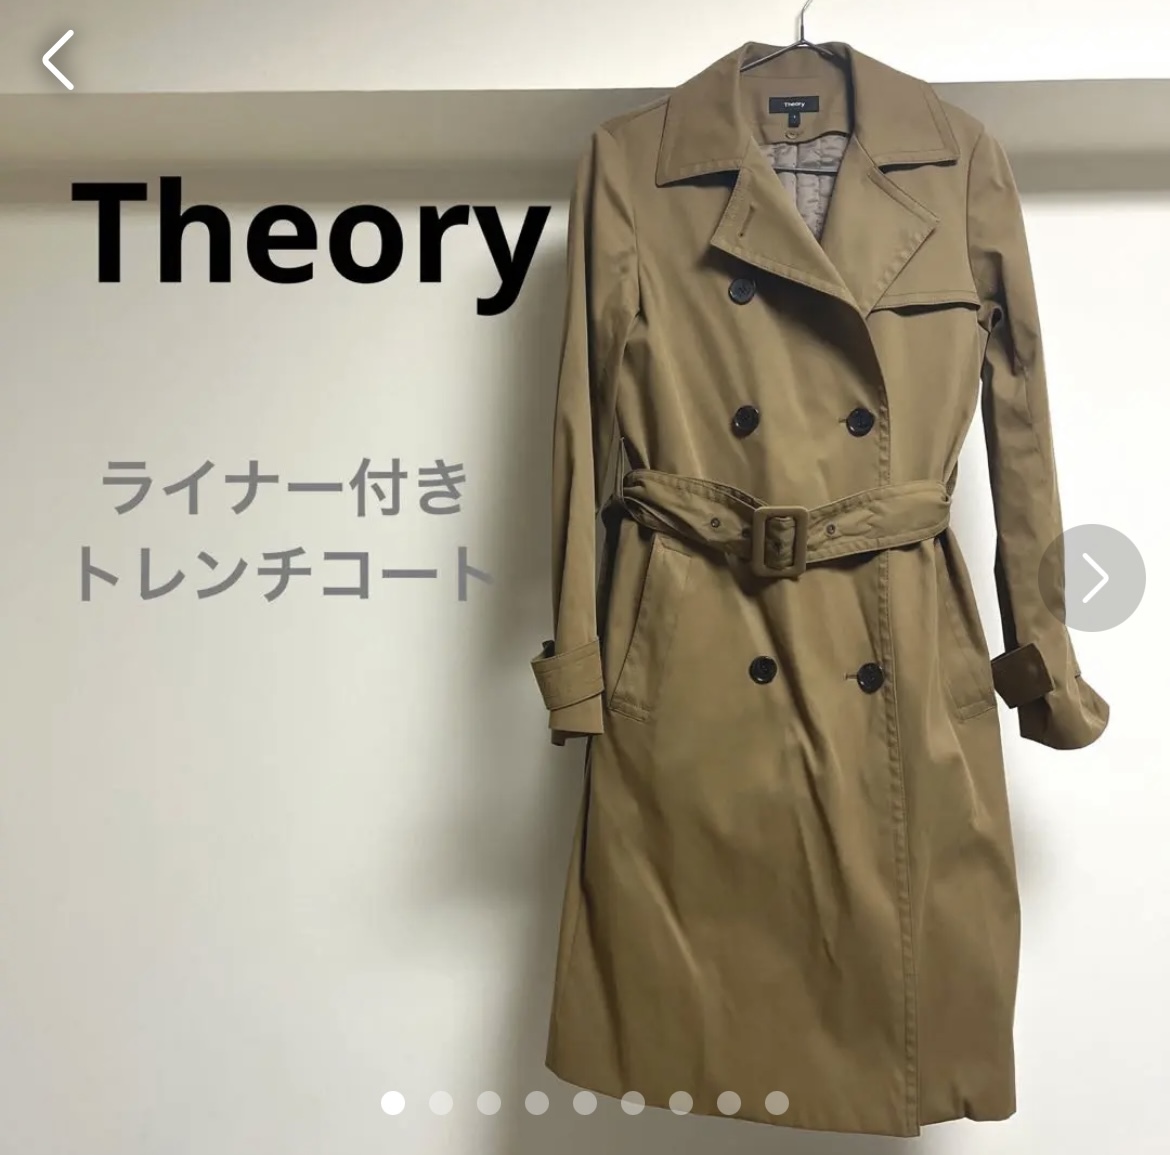 Theory ライナー付き トレンチコート レディースファッション コート 